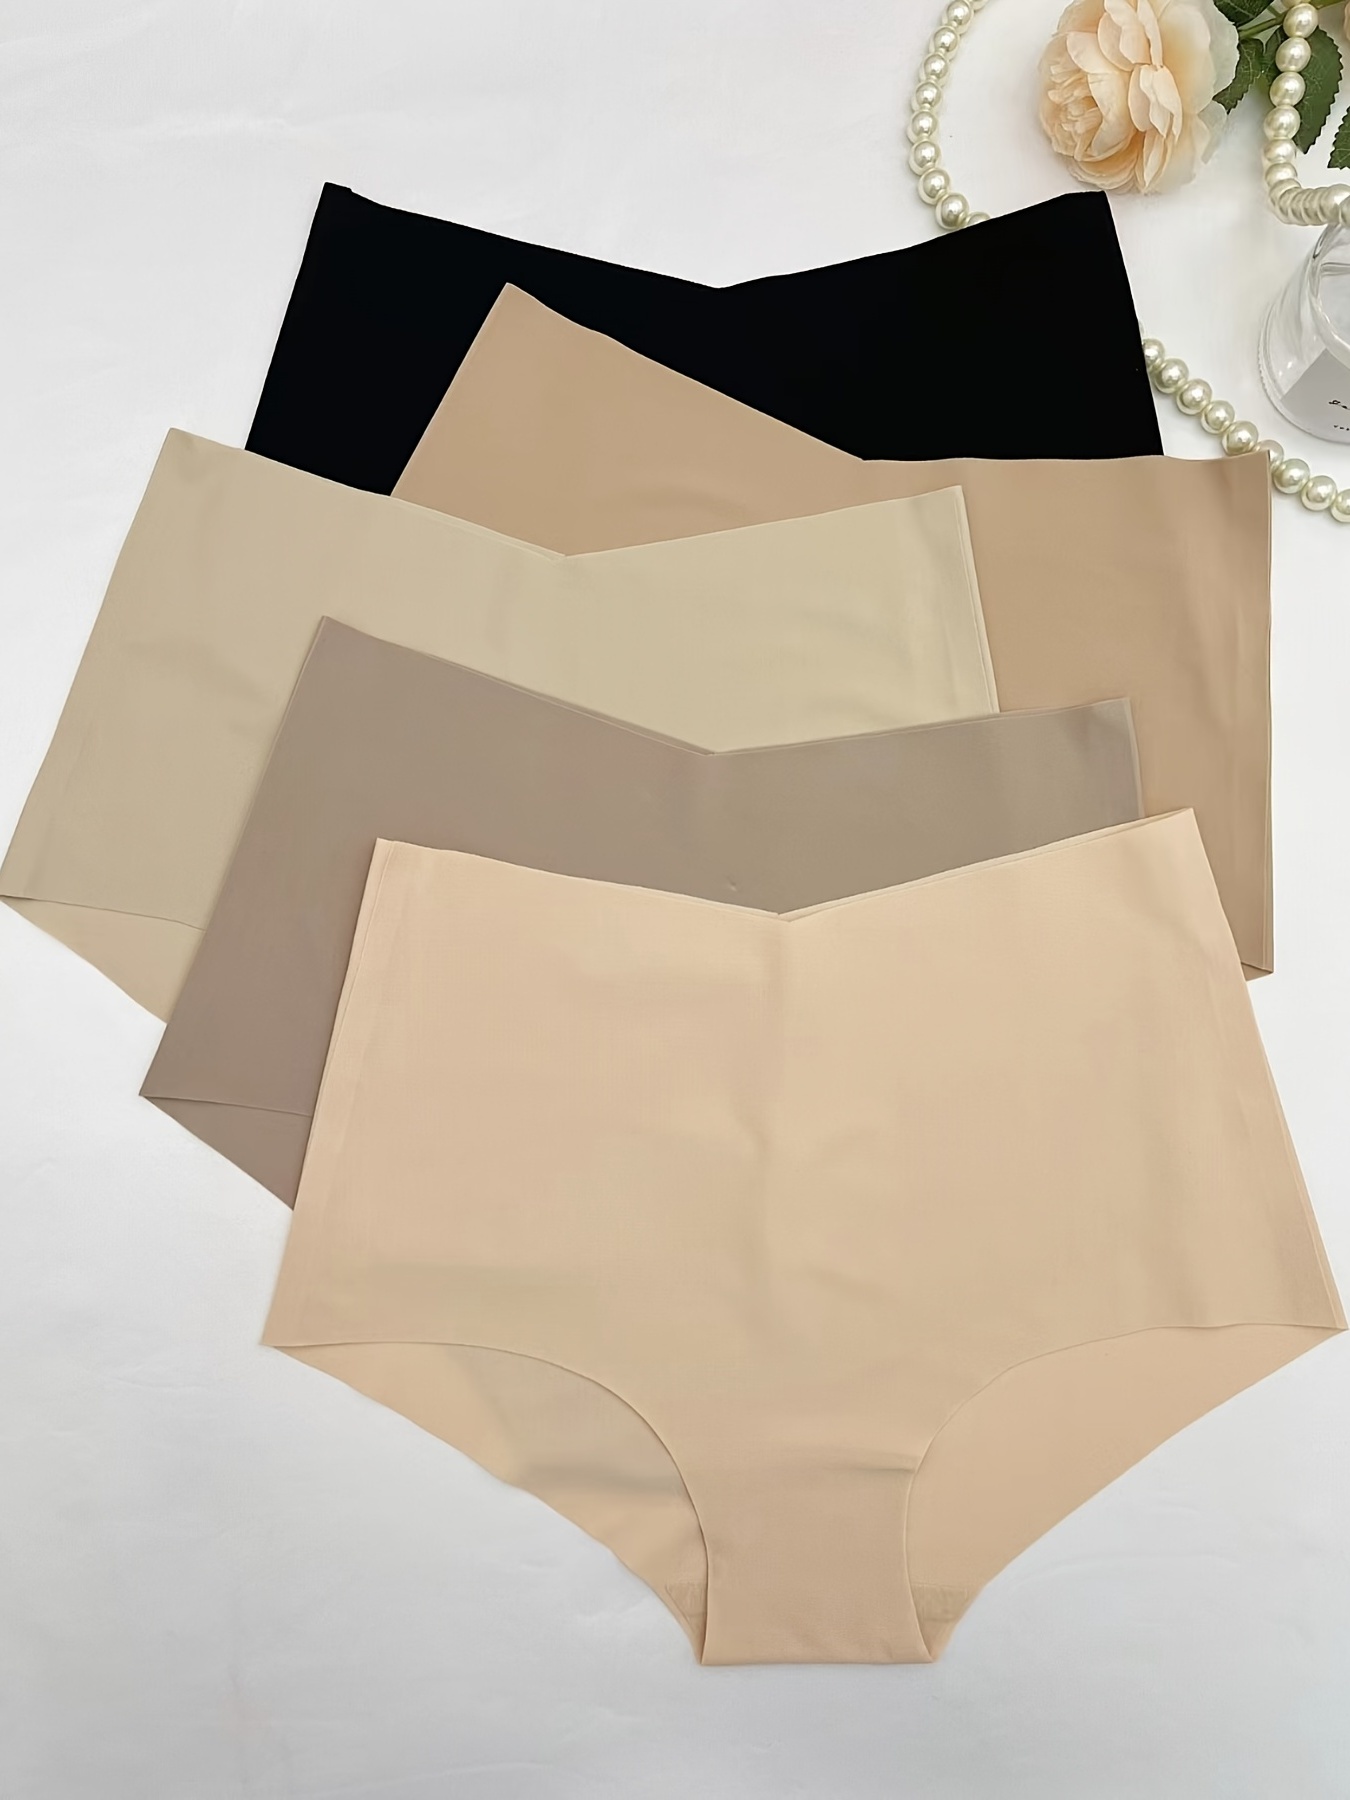 FallSweet No Show High Waist Briefs Underwear for Women